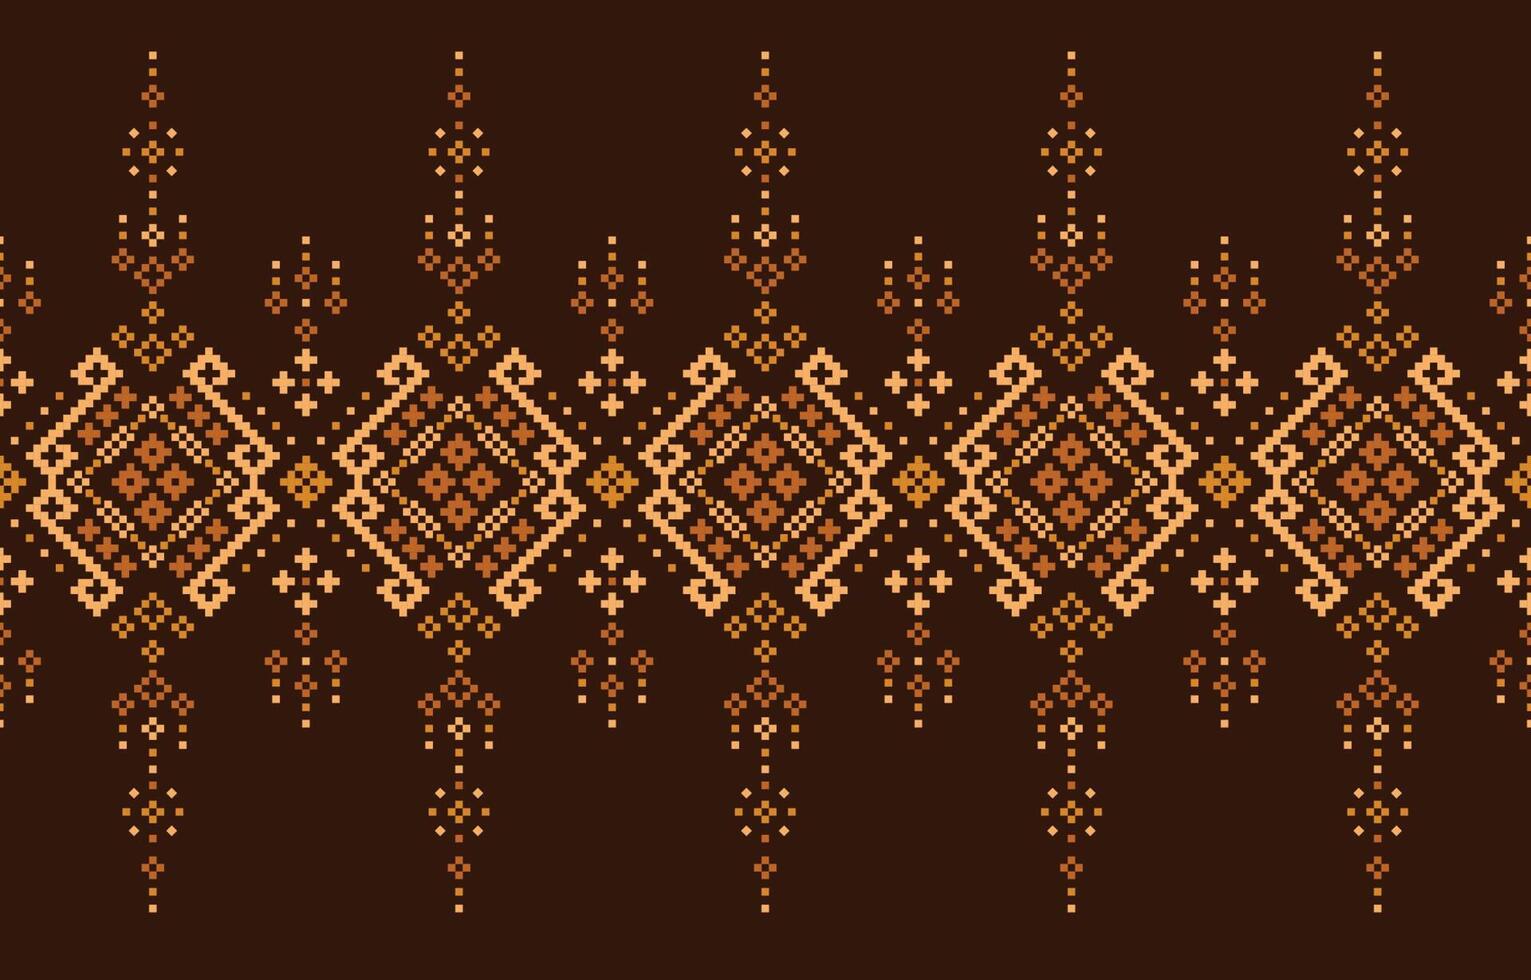 Ethnic geometric pattern. Cross-stitch motif boho retro textile ikat vector graphic design